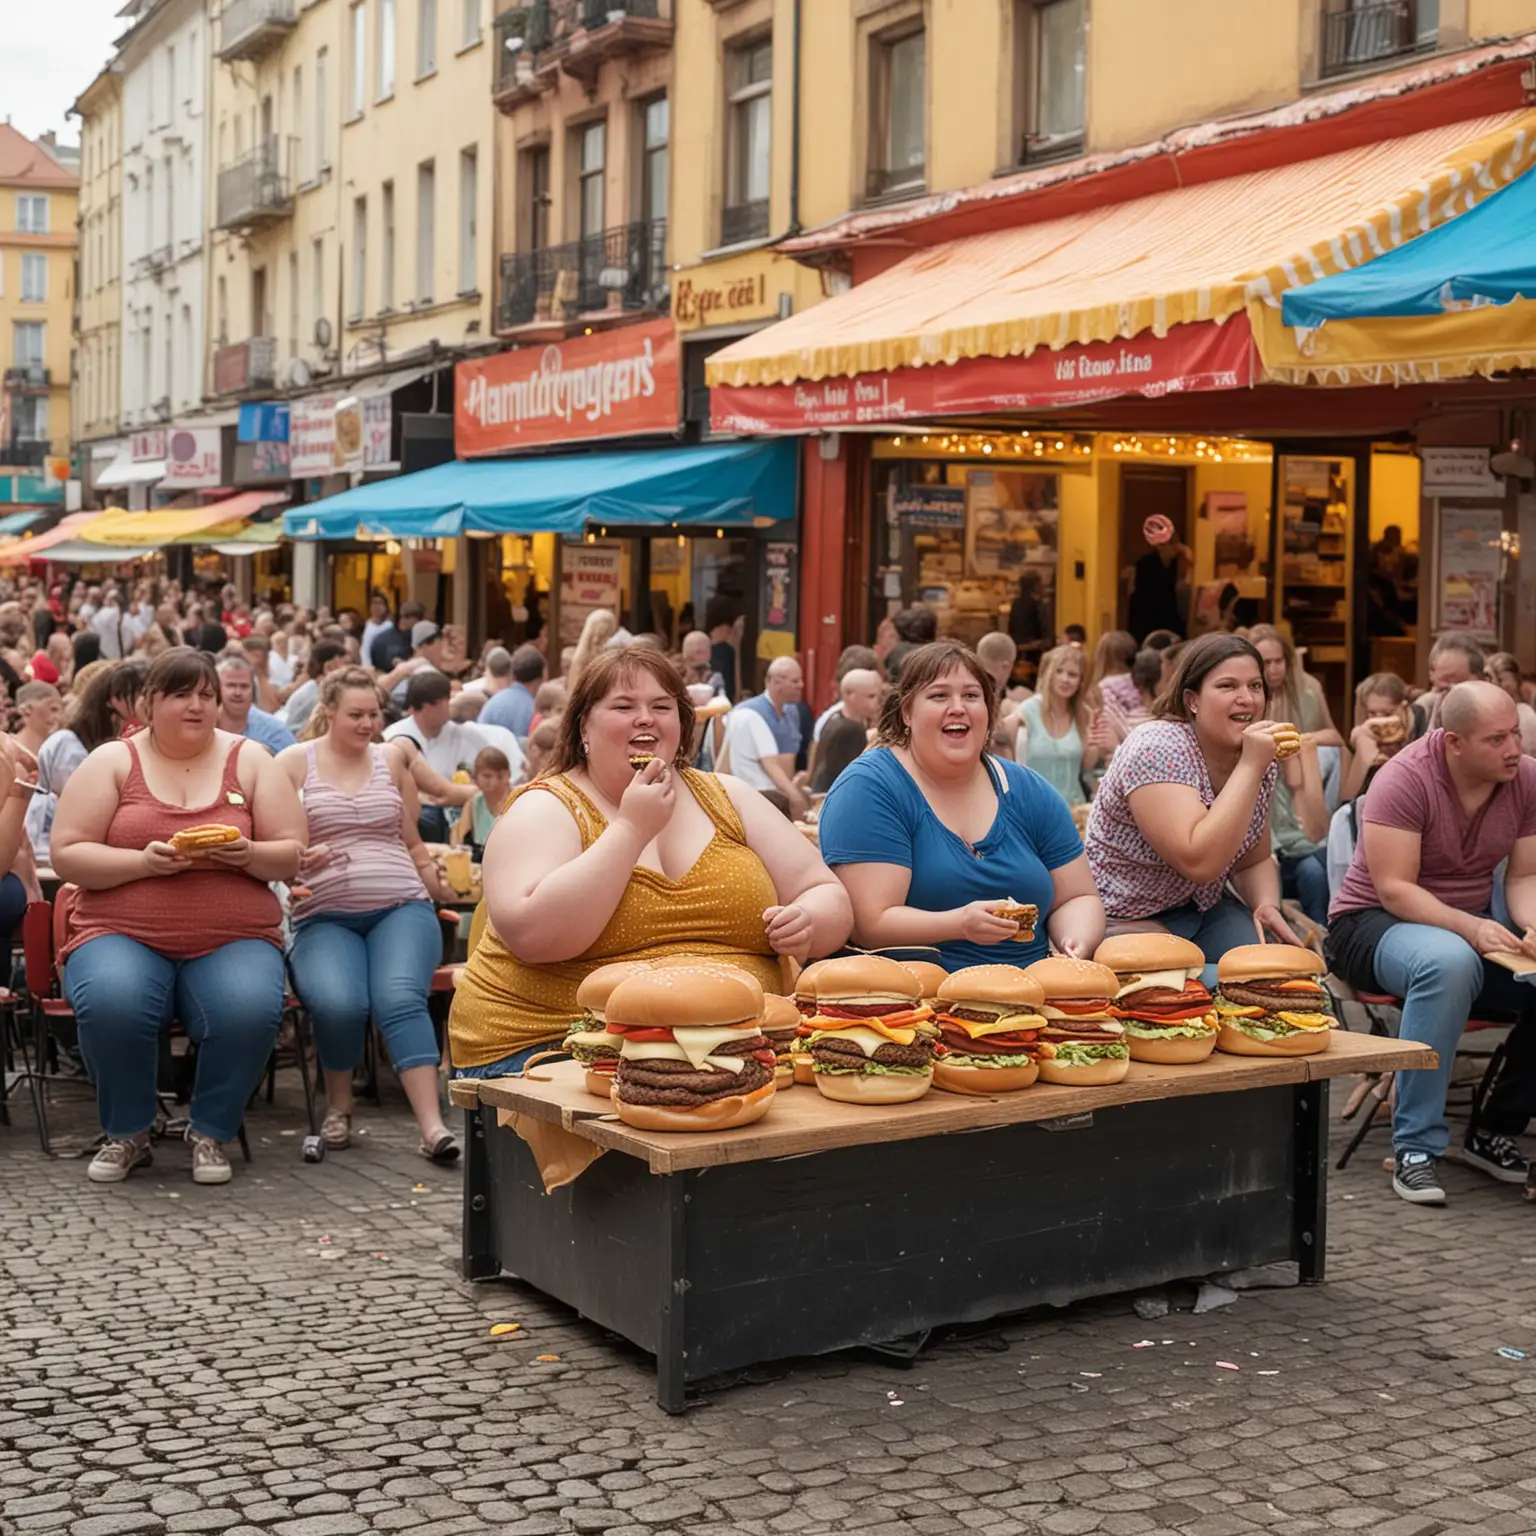 Joyful Festival Scene Overweight People Enjoying Flavorful Hamburgers in a Vibrant Atmosphere